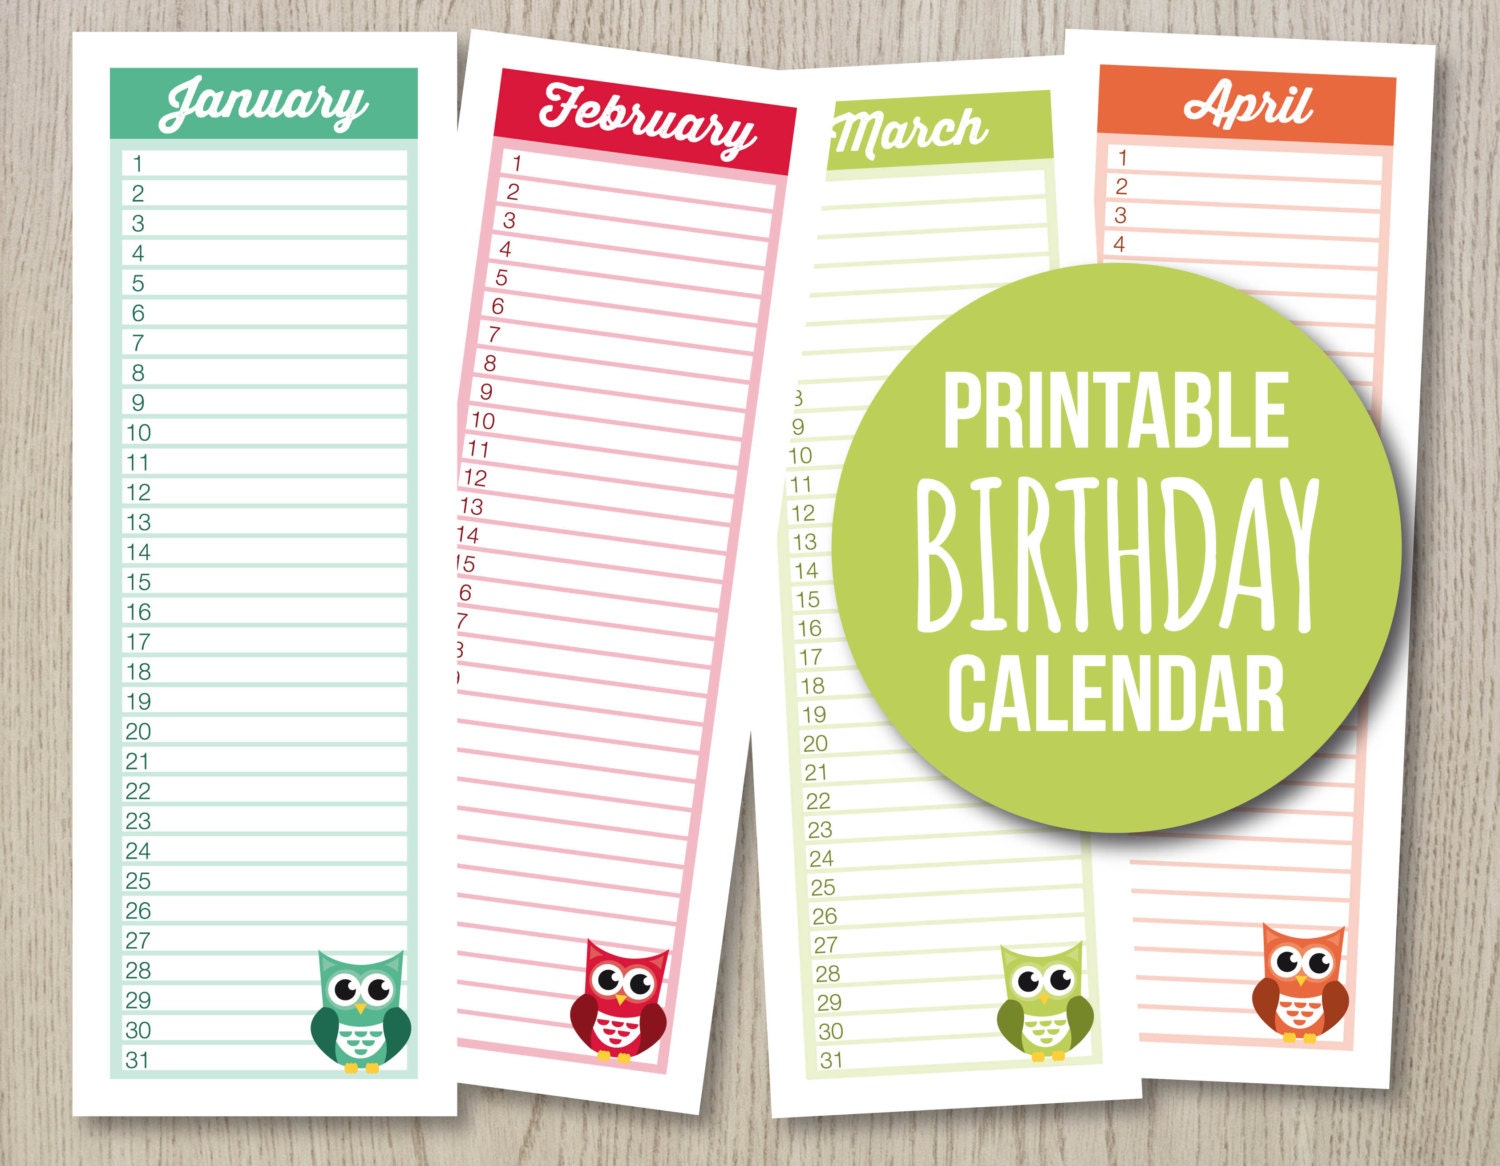 printable birthday calendar a4 size two months per sheet